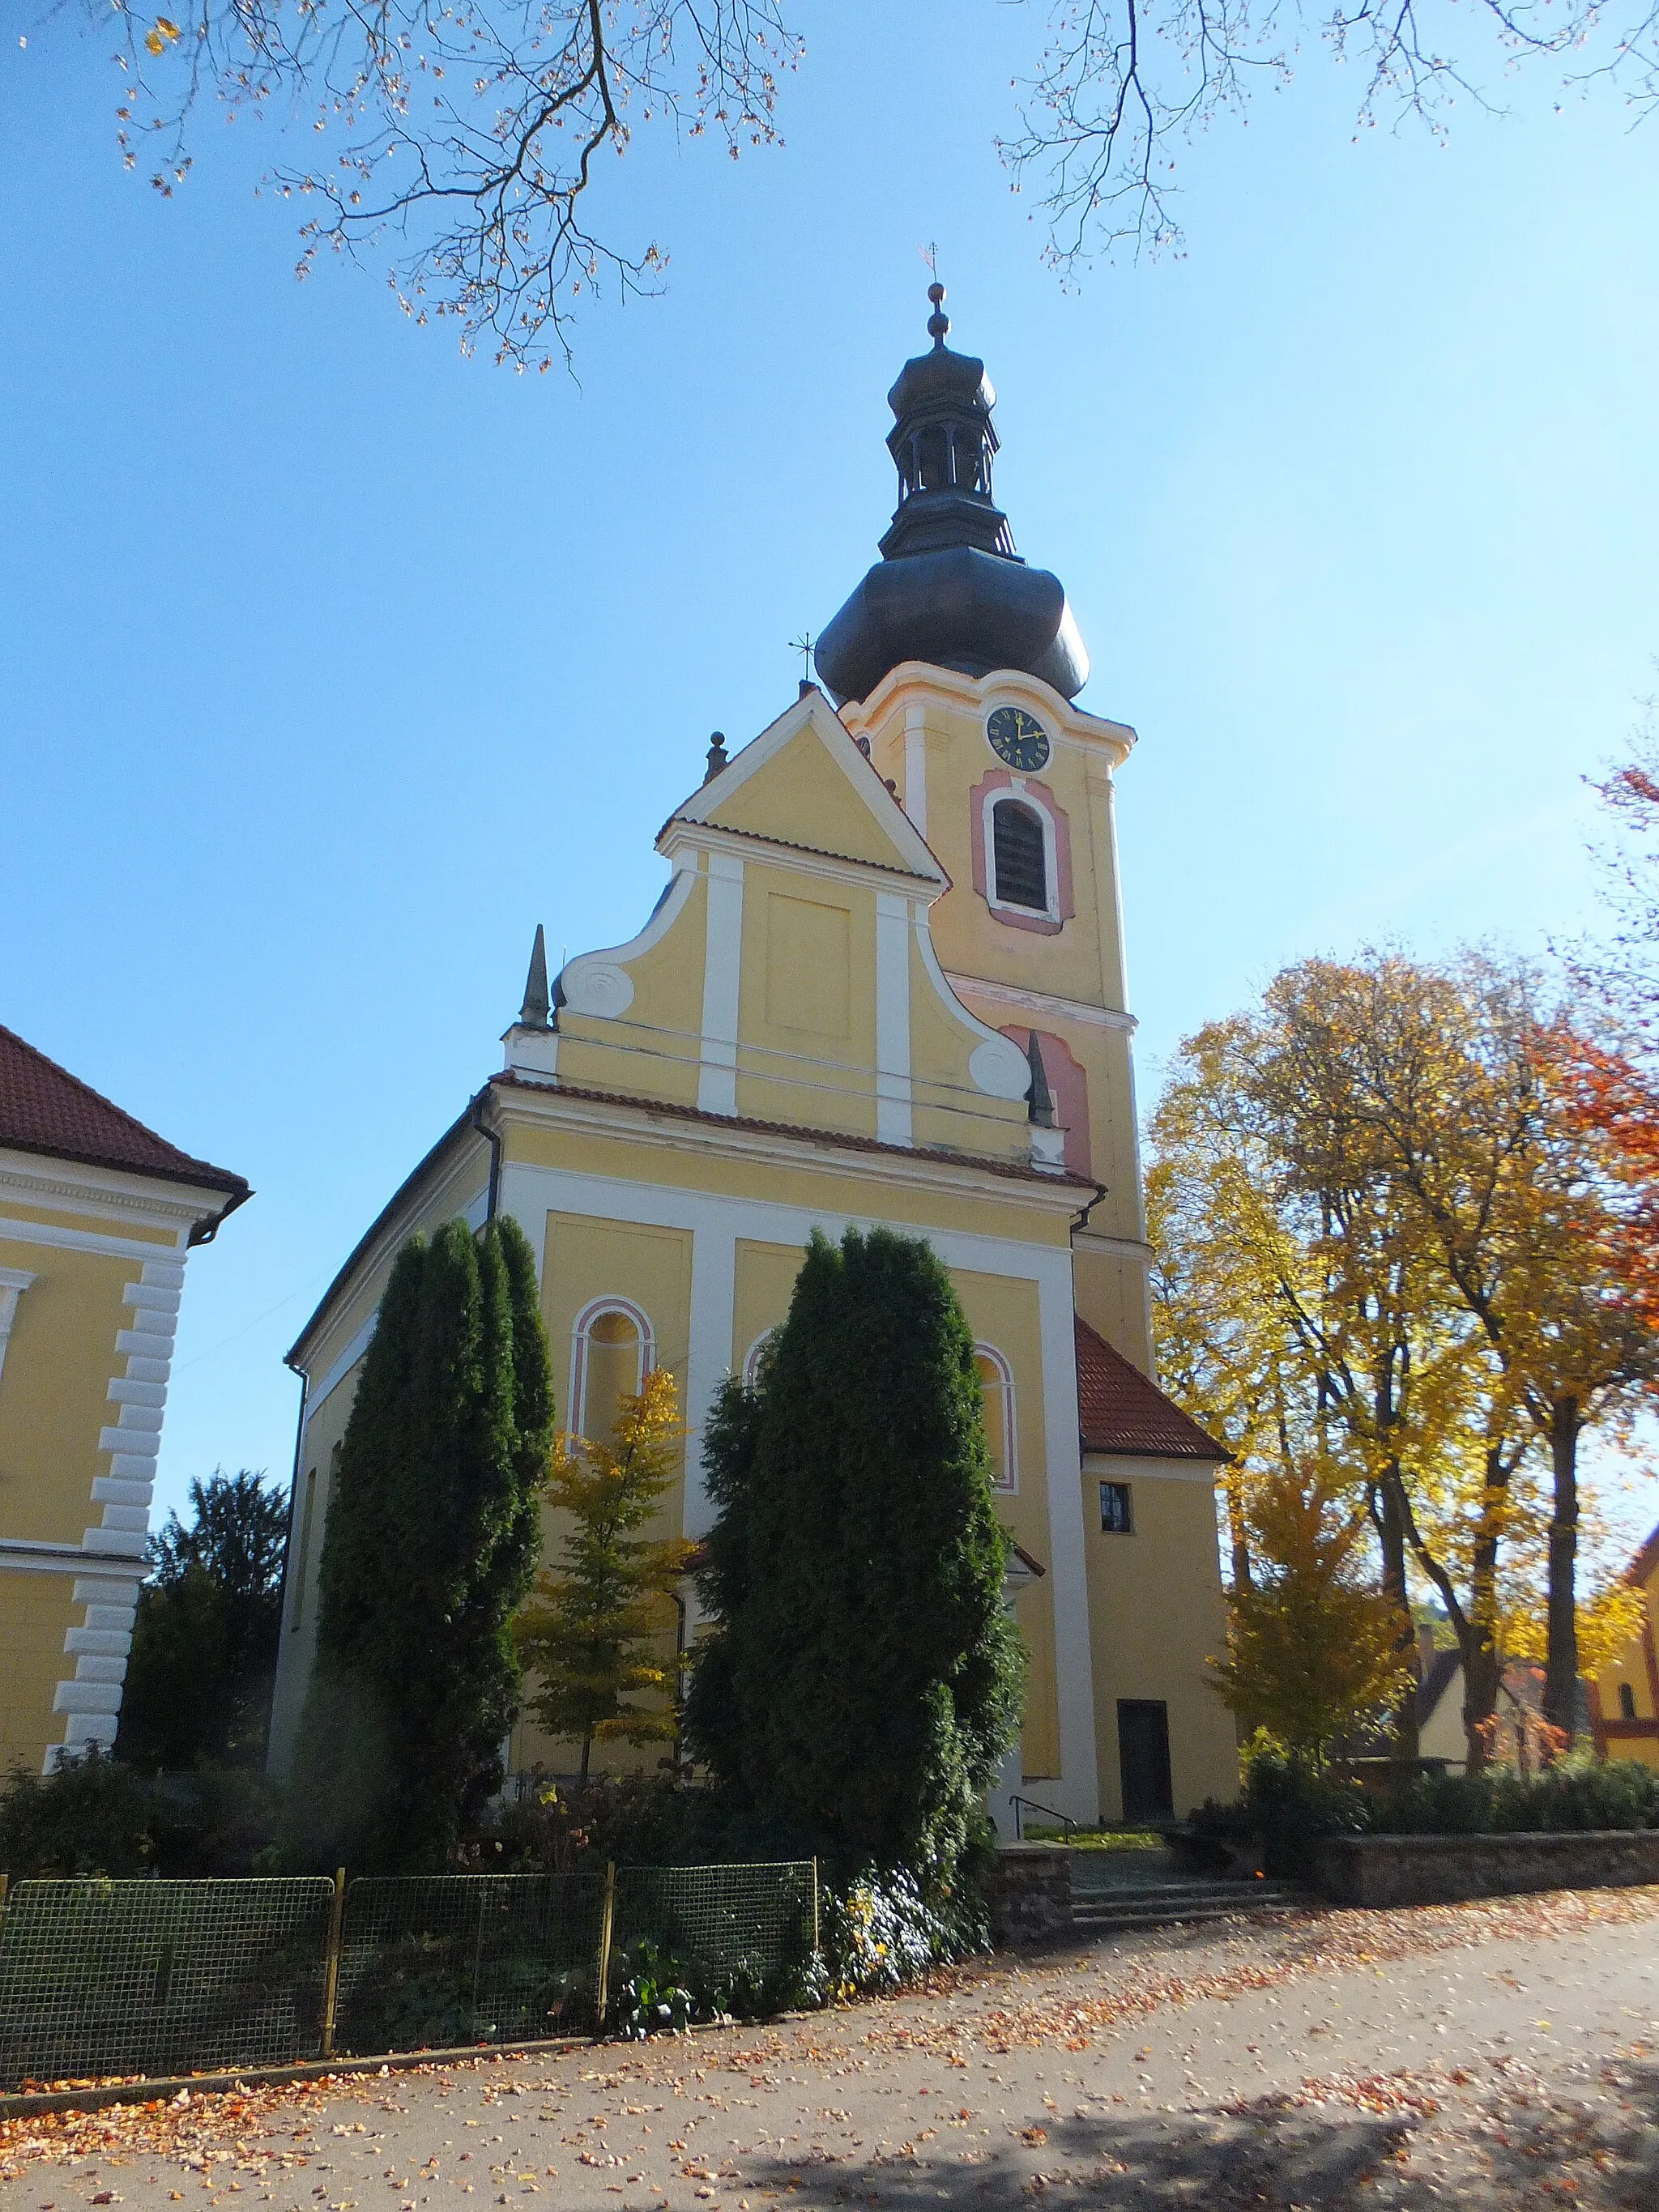 Photo showing: The Holy Trinity Church in Chýnov